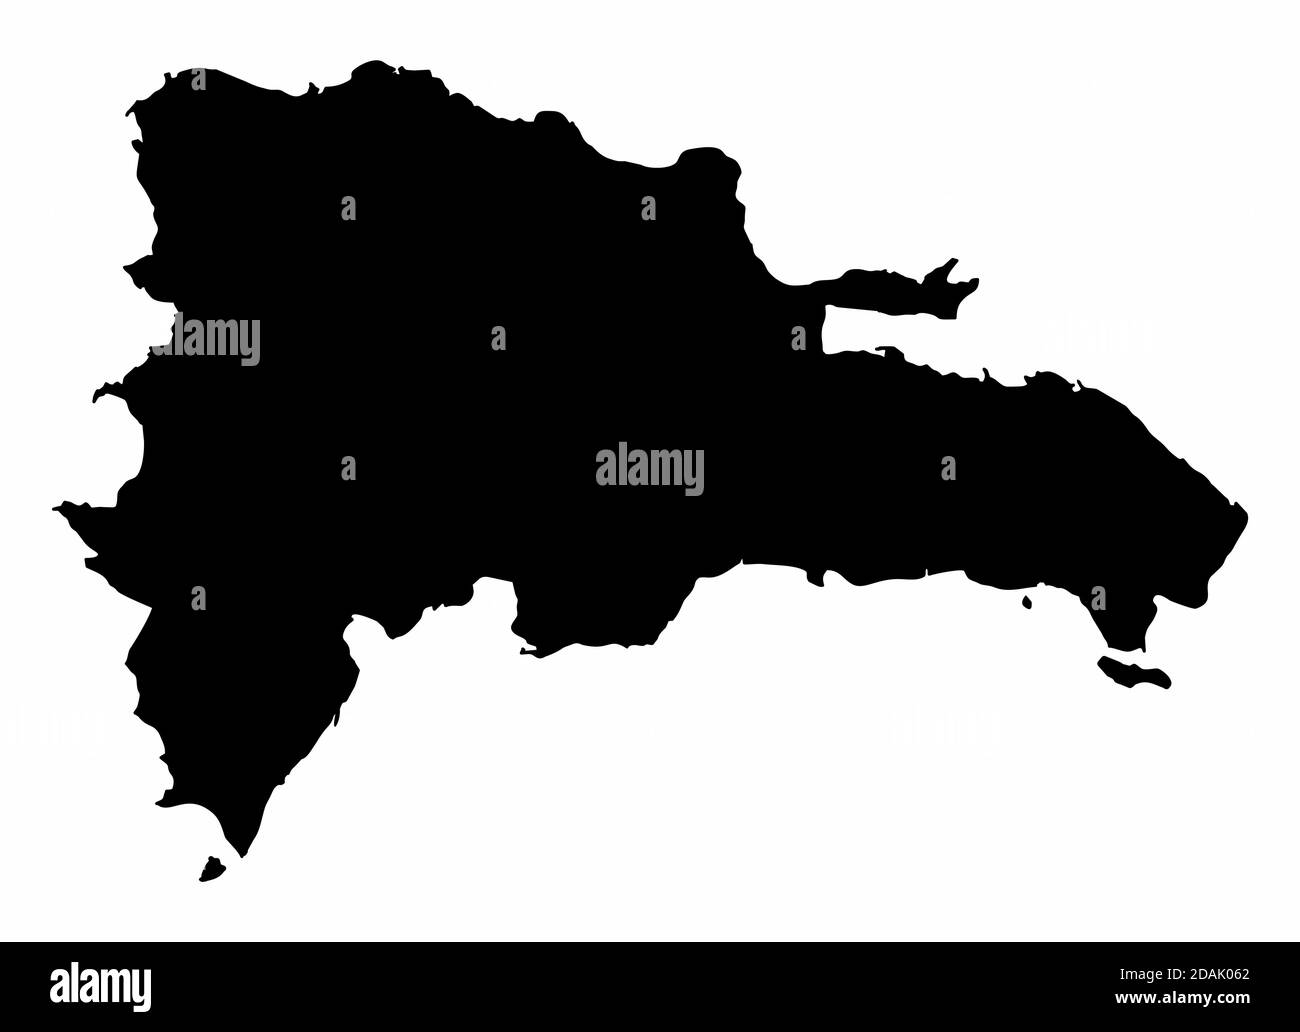 Dominican Republic silhouette map Stock Vector